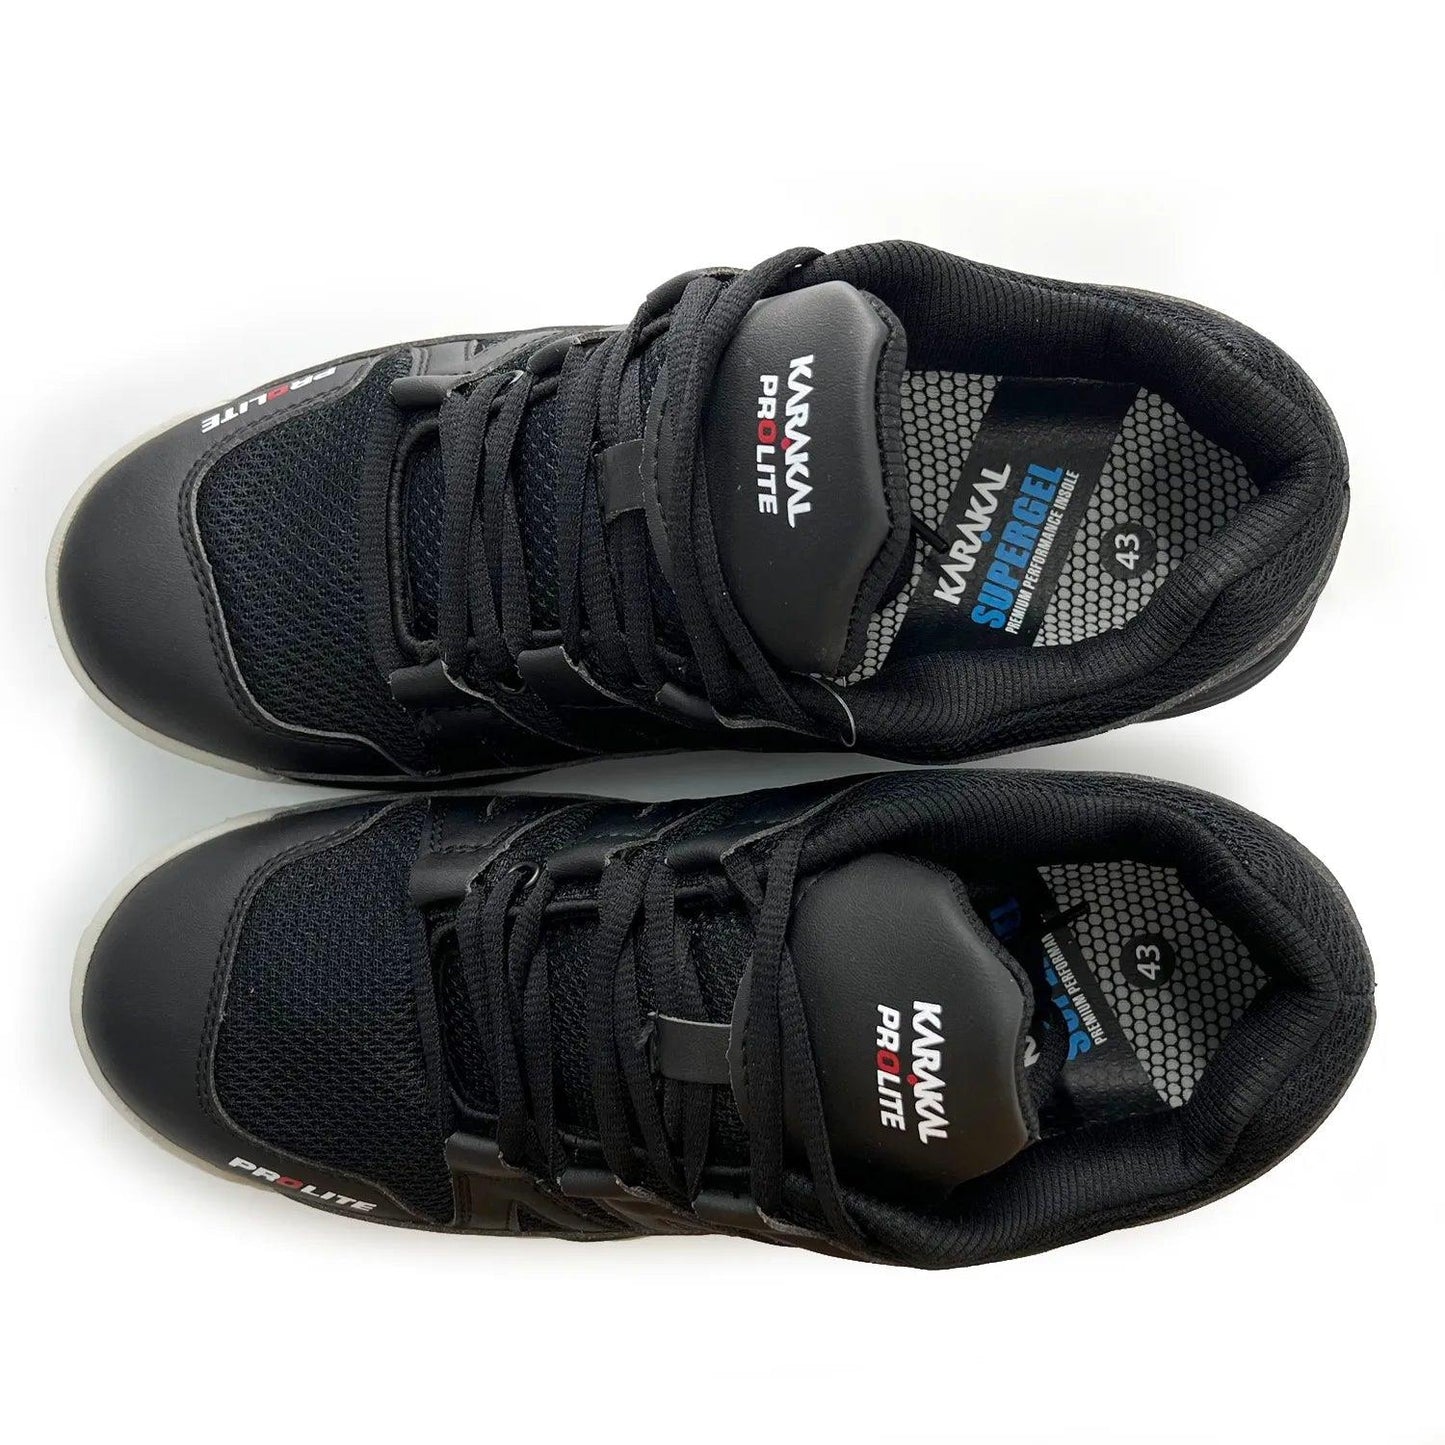 Karakal KF Pro Lite Badminton Shoes - New Black